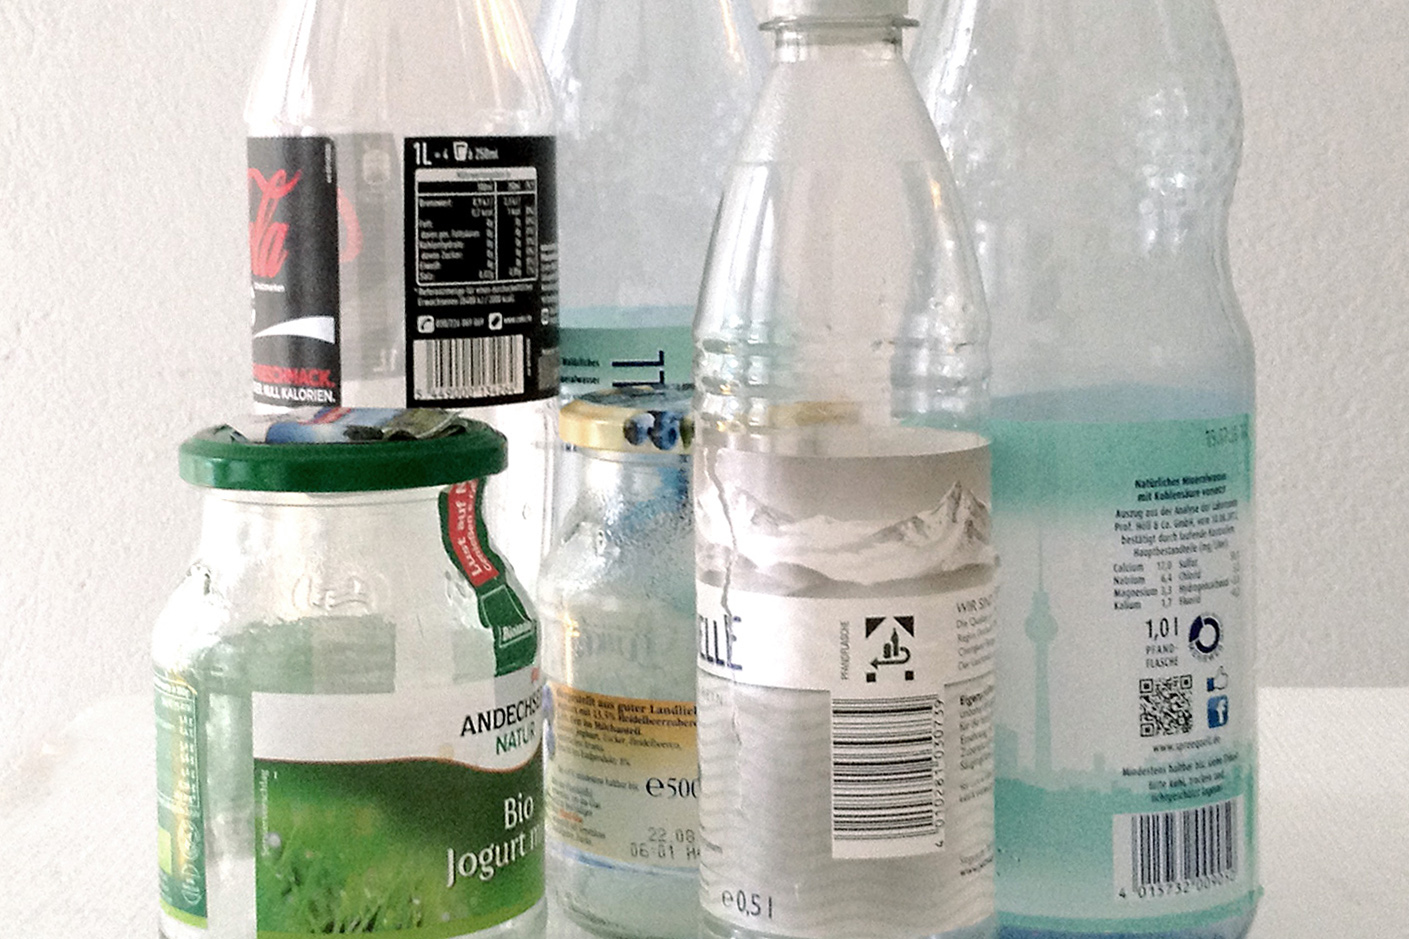 PET Juice Bottles in Germany to Require Mandatory Deposit, 2021-05-26